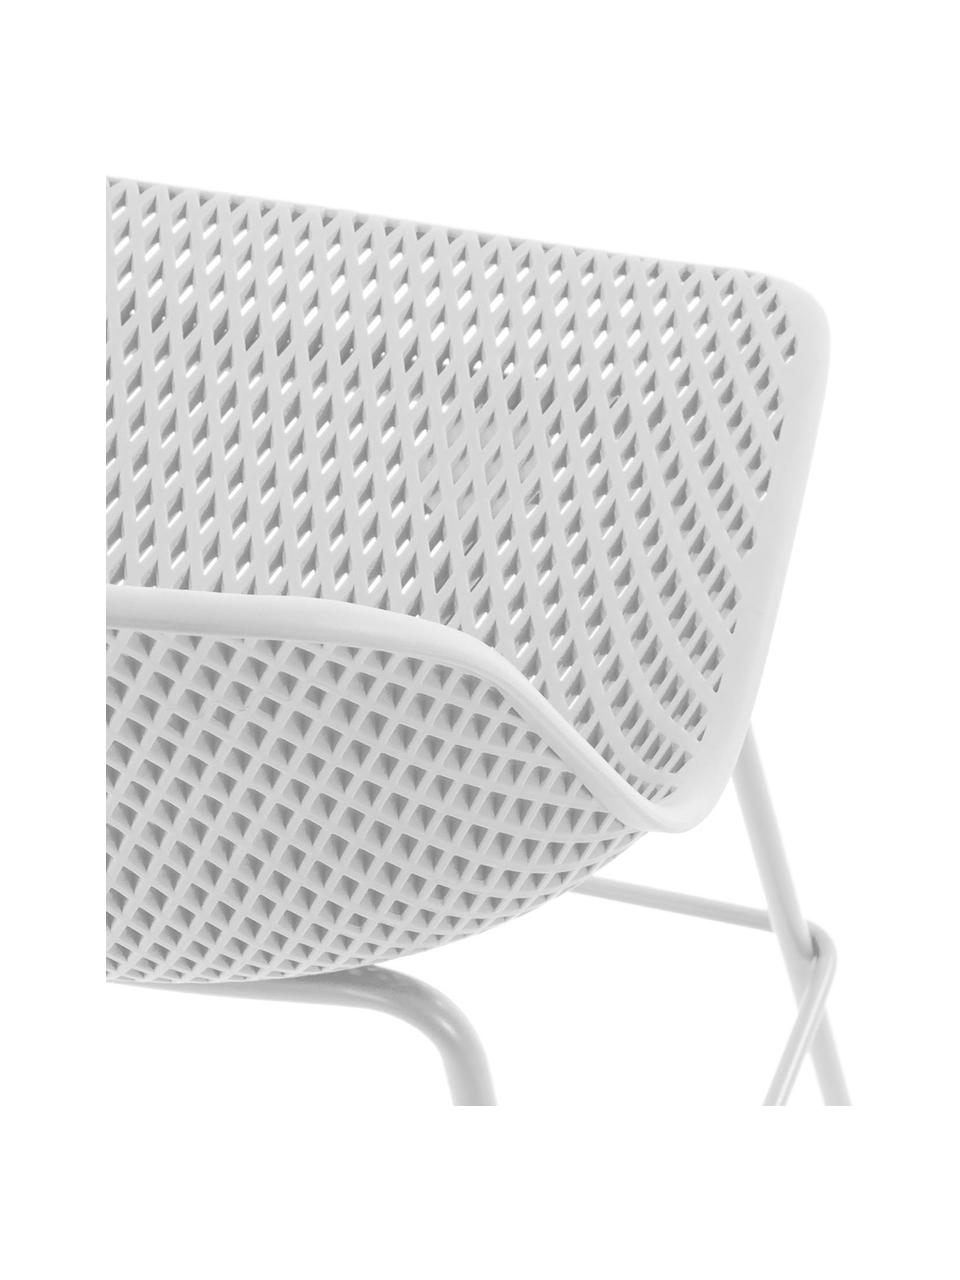 Metall-Barstuhl Quinby in Weiß, Gestell: Metall, lackiert, Sitzfläche: Kunststoff, lackiert, Weiß, B 48 x H 107 cm